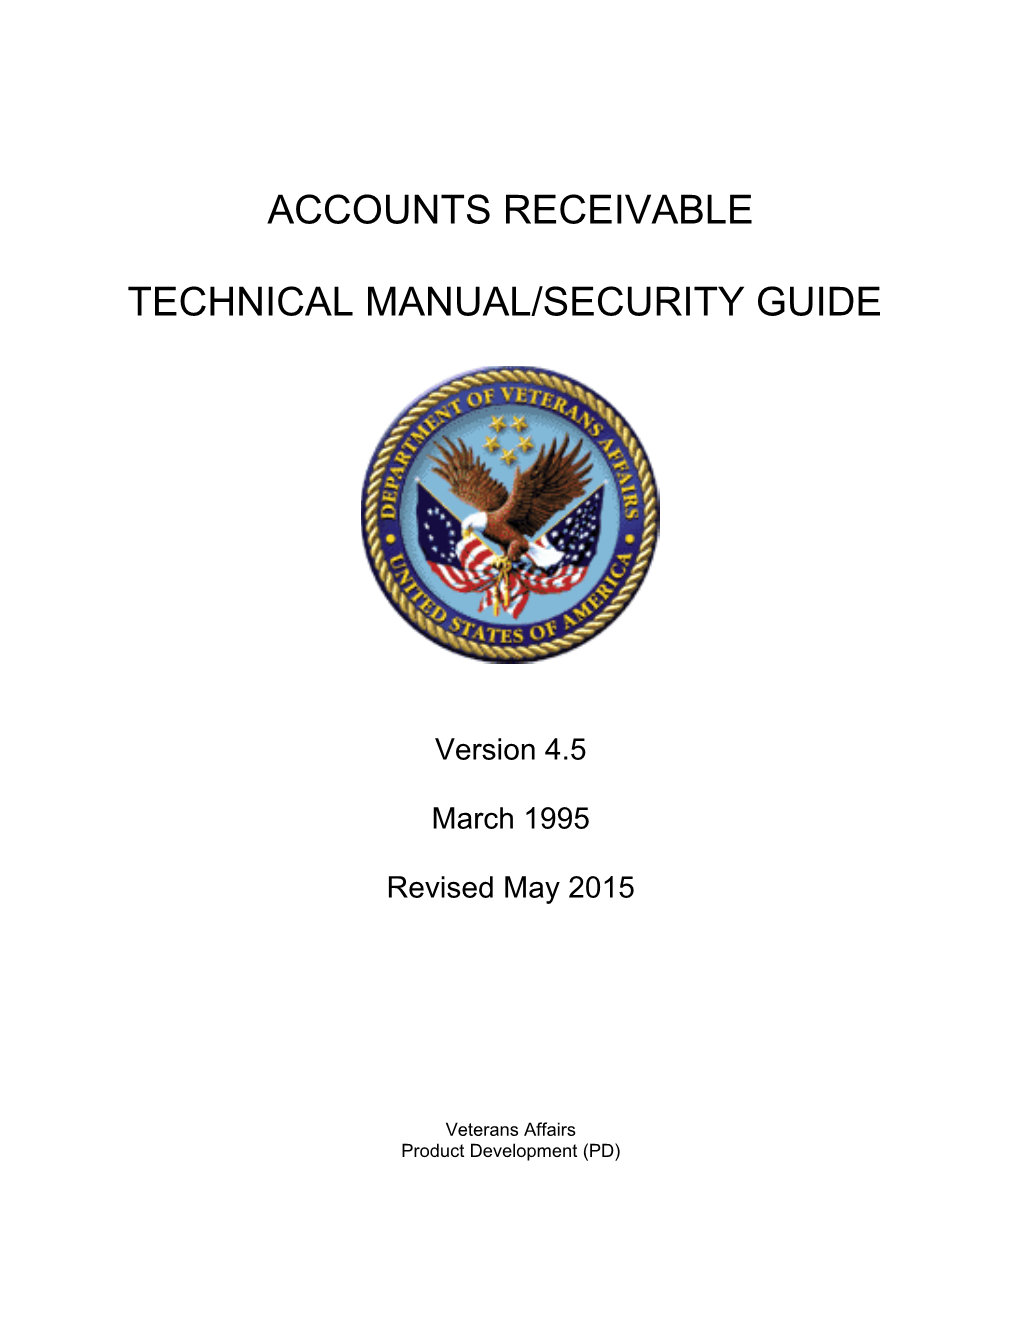 Accounts Receivable Technical Manual